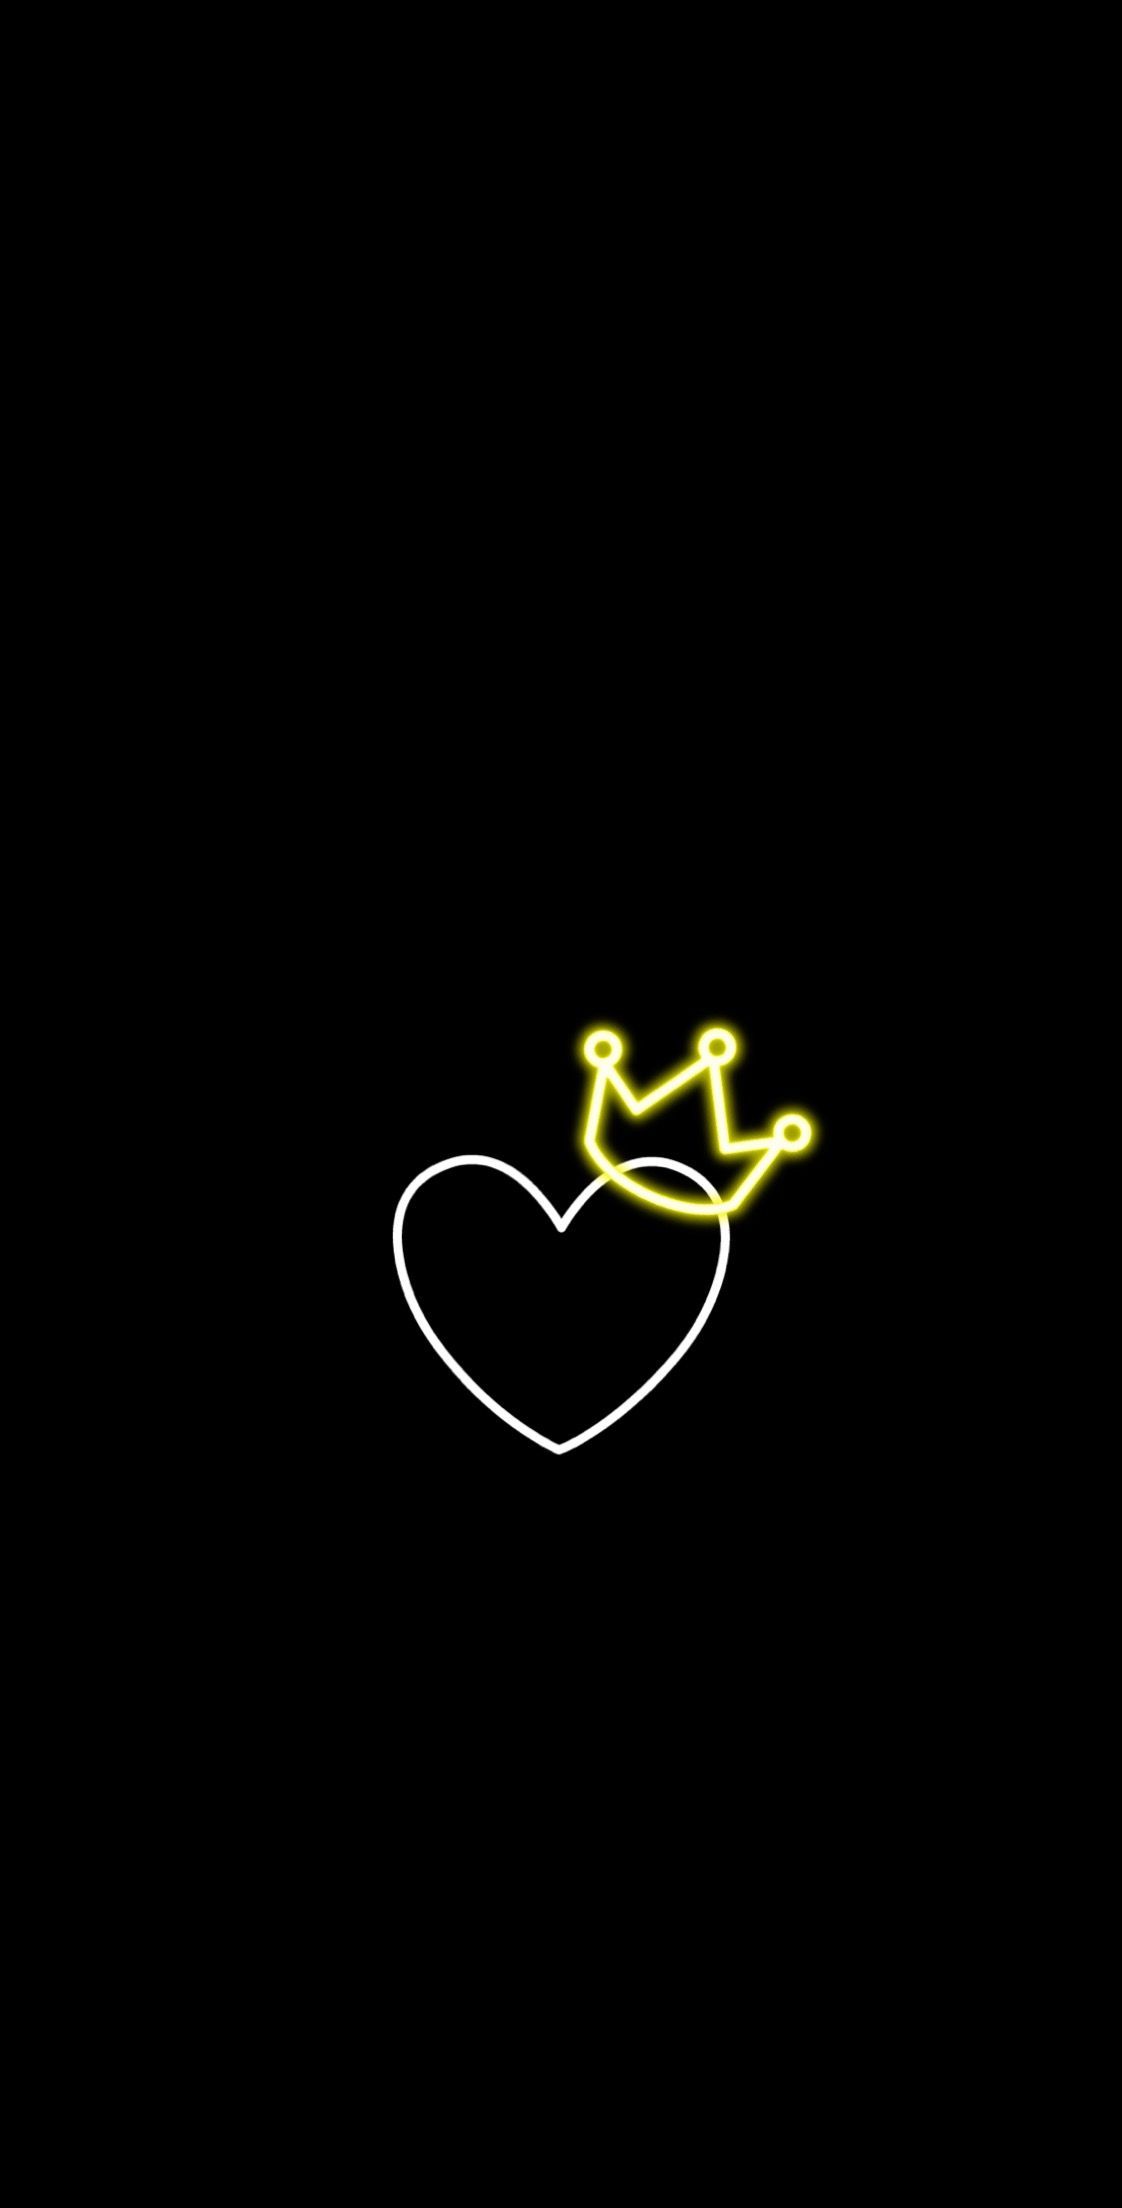 Glitter Black Heart Wallpaper for iPhone Free PNG ImageIllustoon